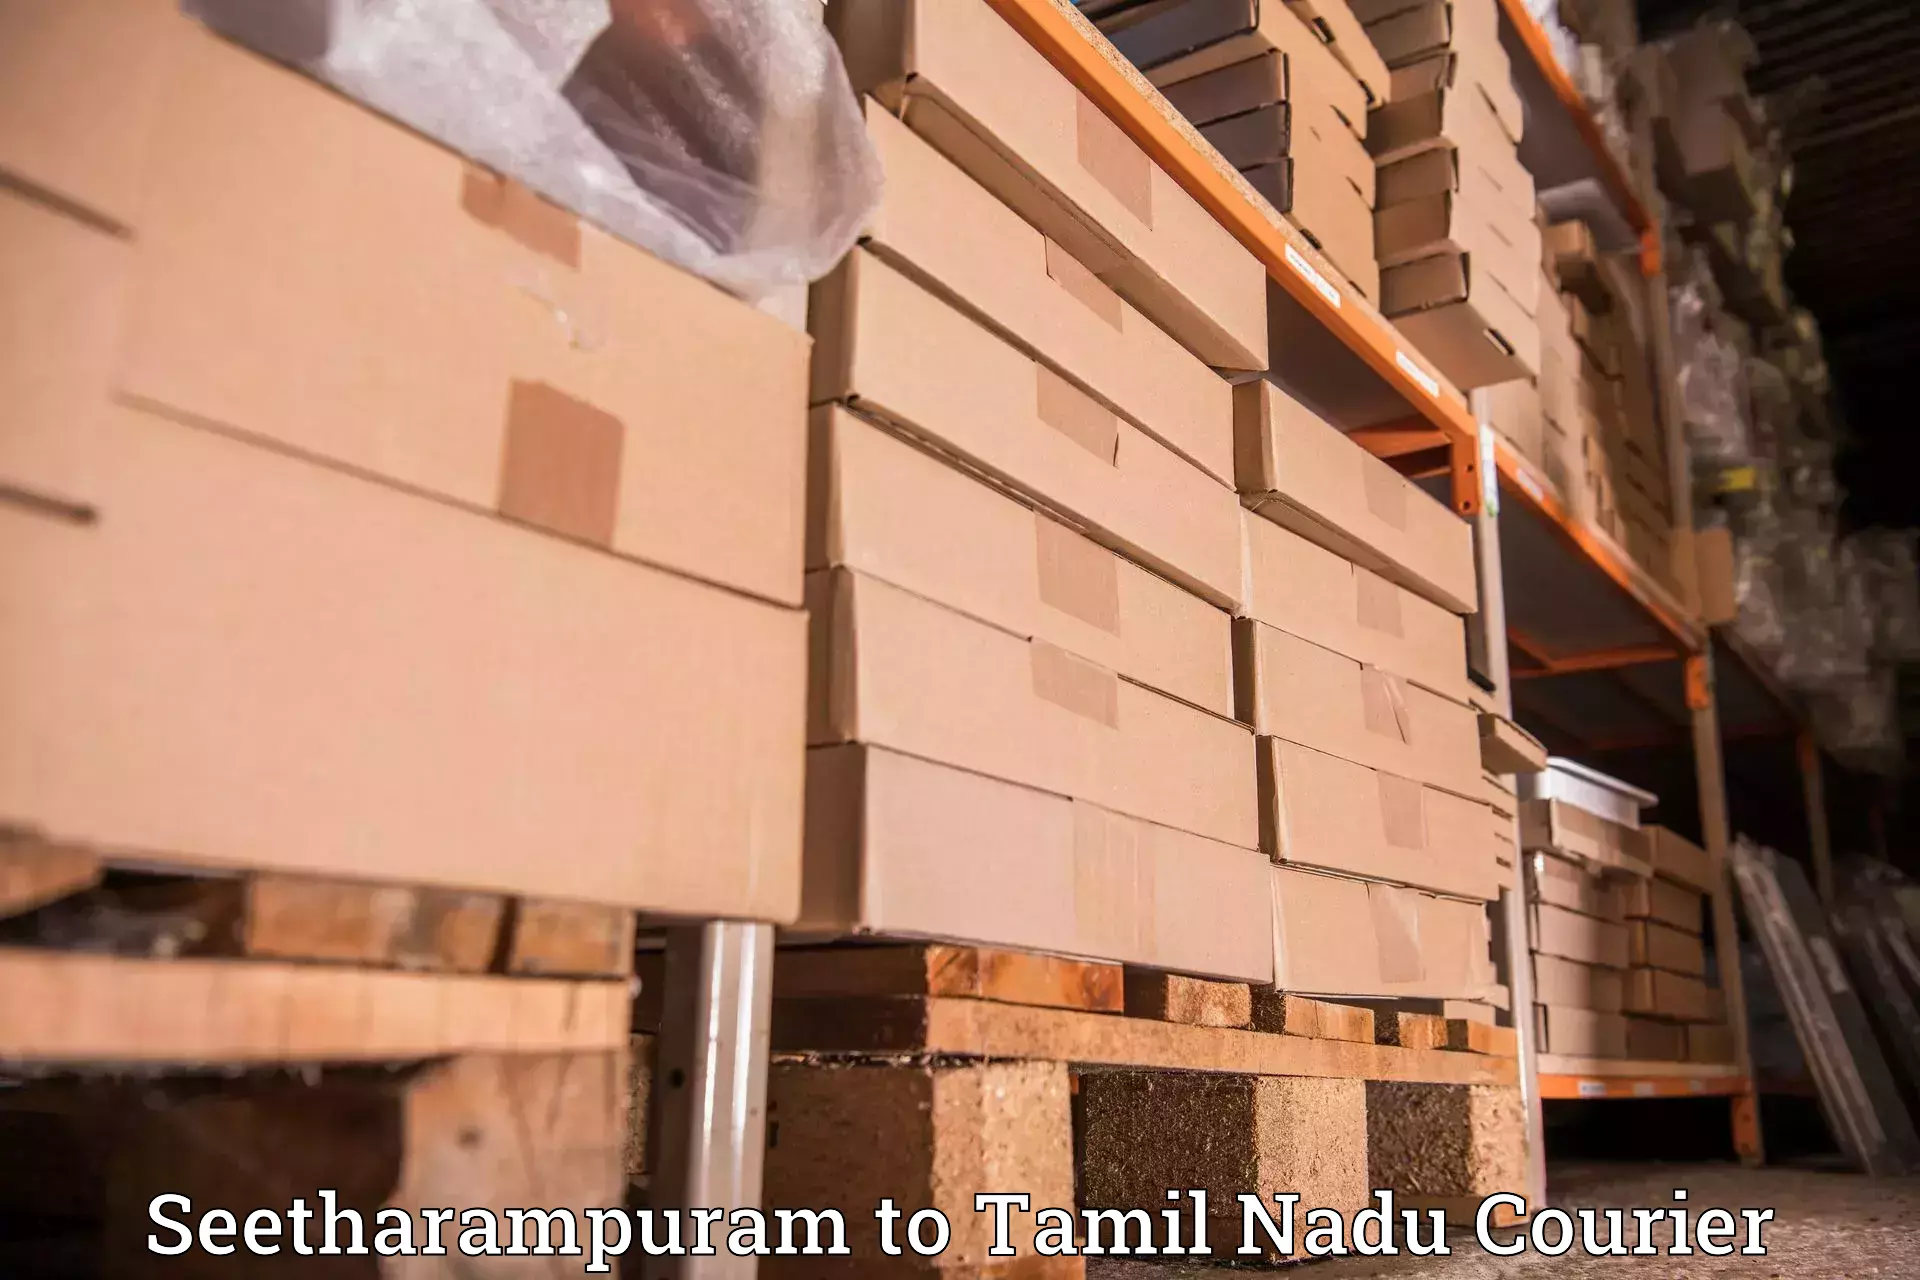 High-speed parcel service Seetharampuram to Tirupattur